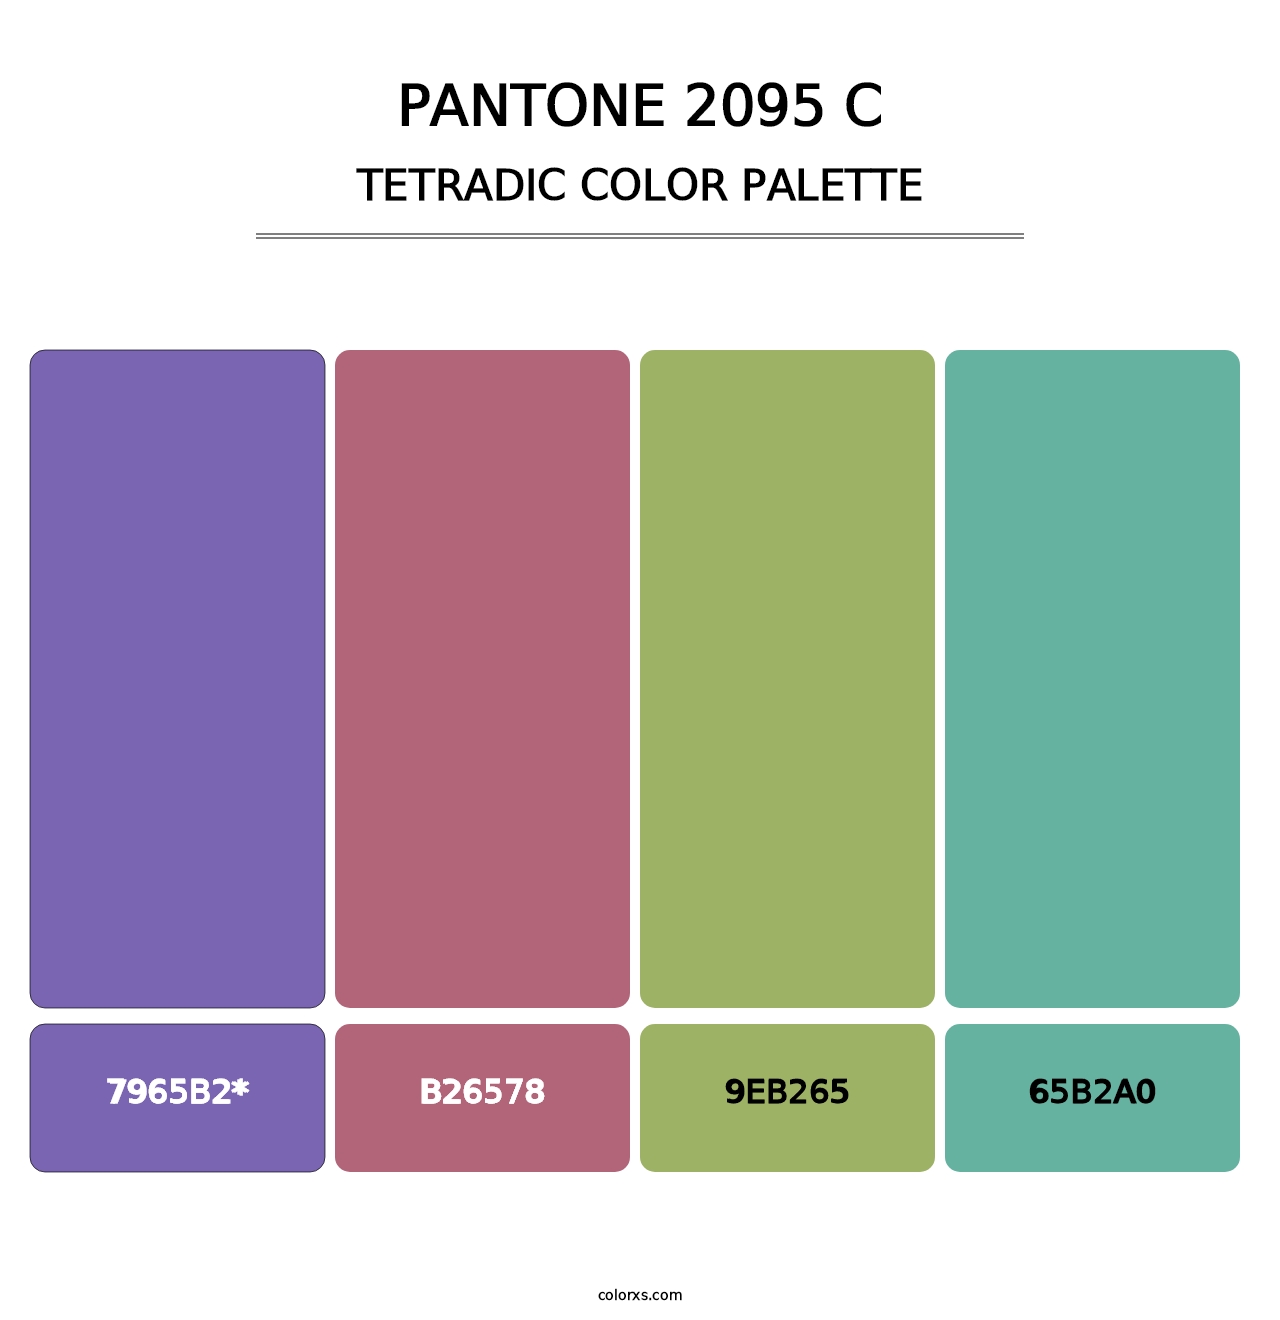 PANTONE 2095 C - Tetradic Color Palette